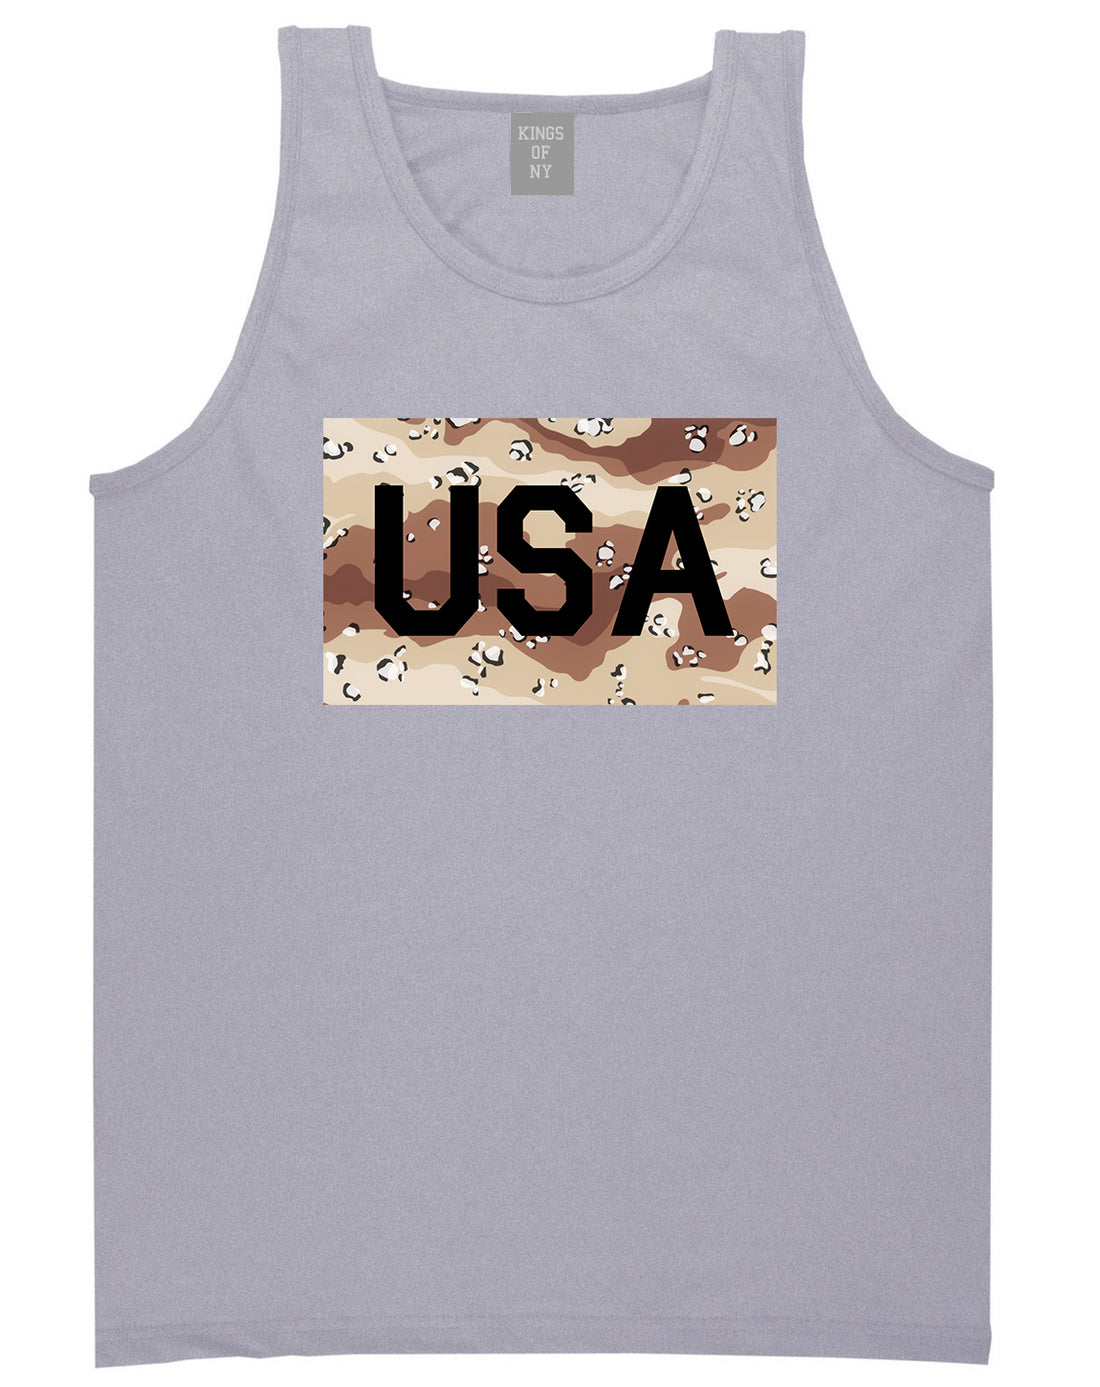 USA_Desert_Camo_Army Mens Grey Tank Top Shirt by Kings Of NY